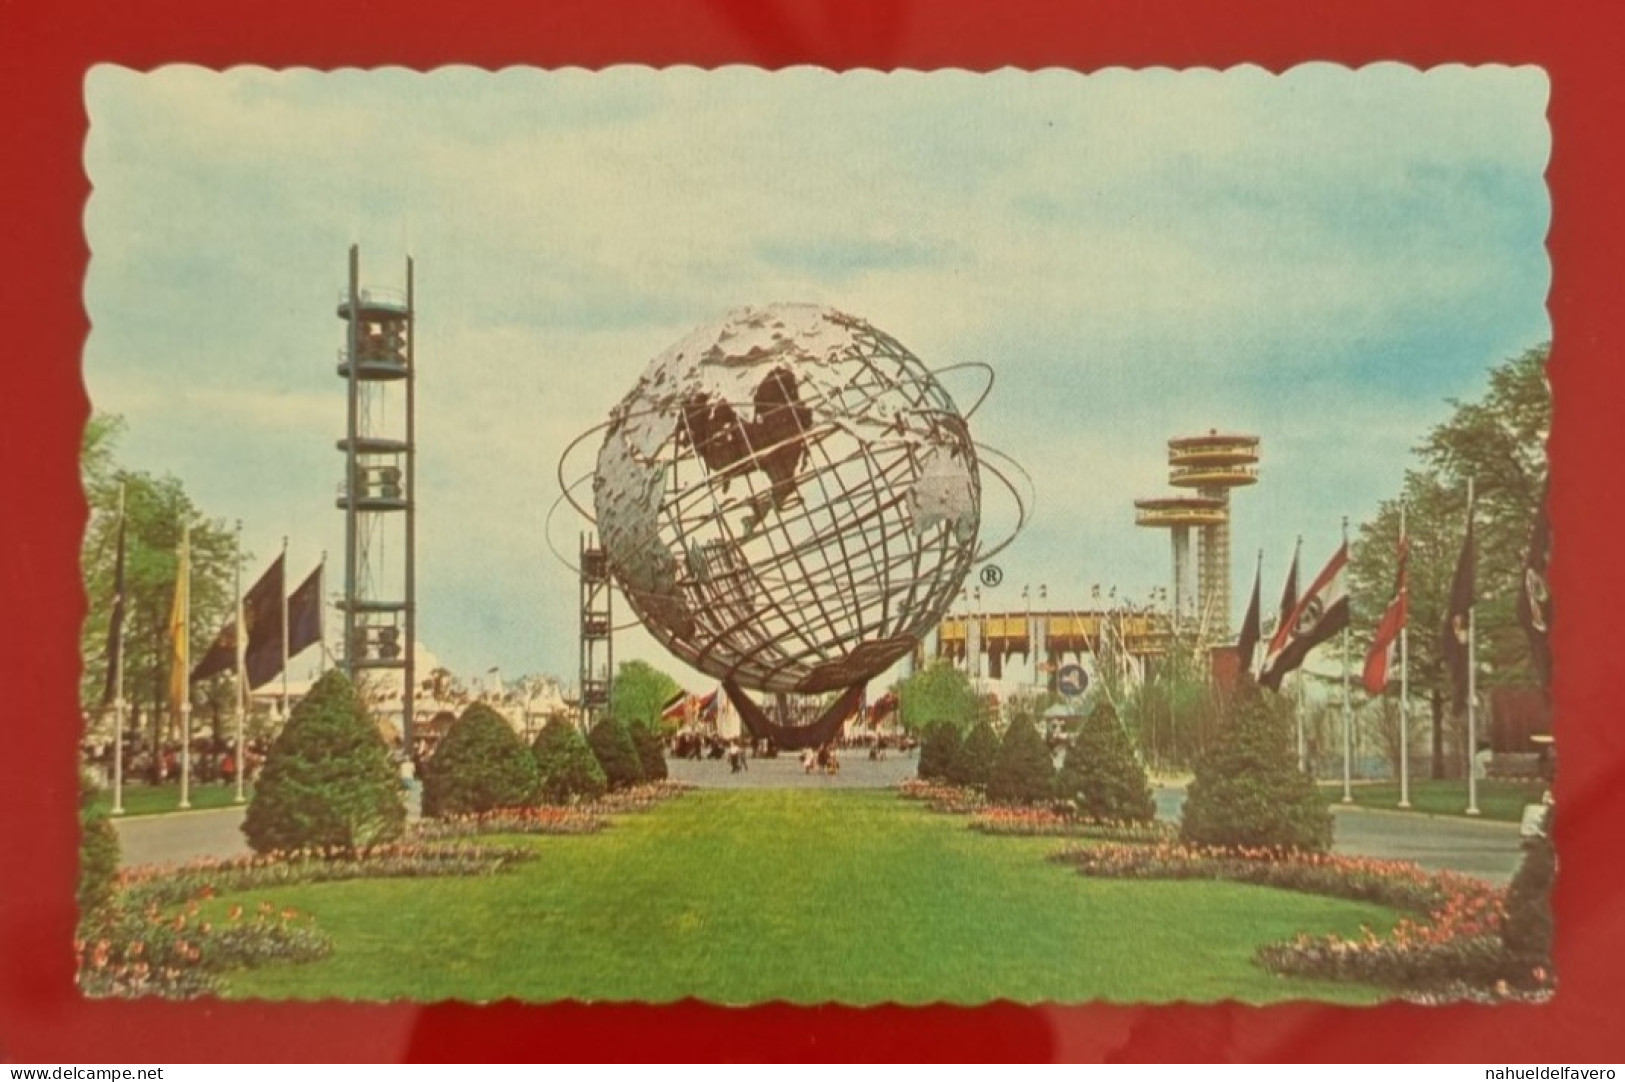 Uncirculated Postcard - USA - NY, NEW YORK WORLD'S FAIR 1964-65 - UNISPHERE - Mostre, Esposizioni